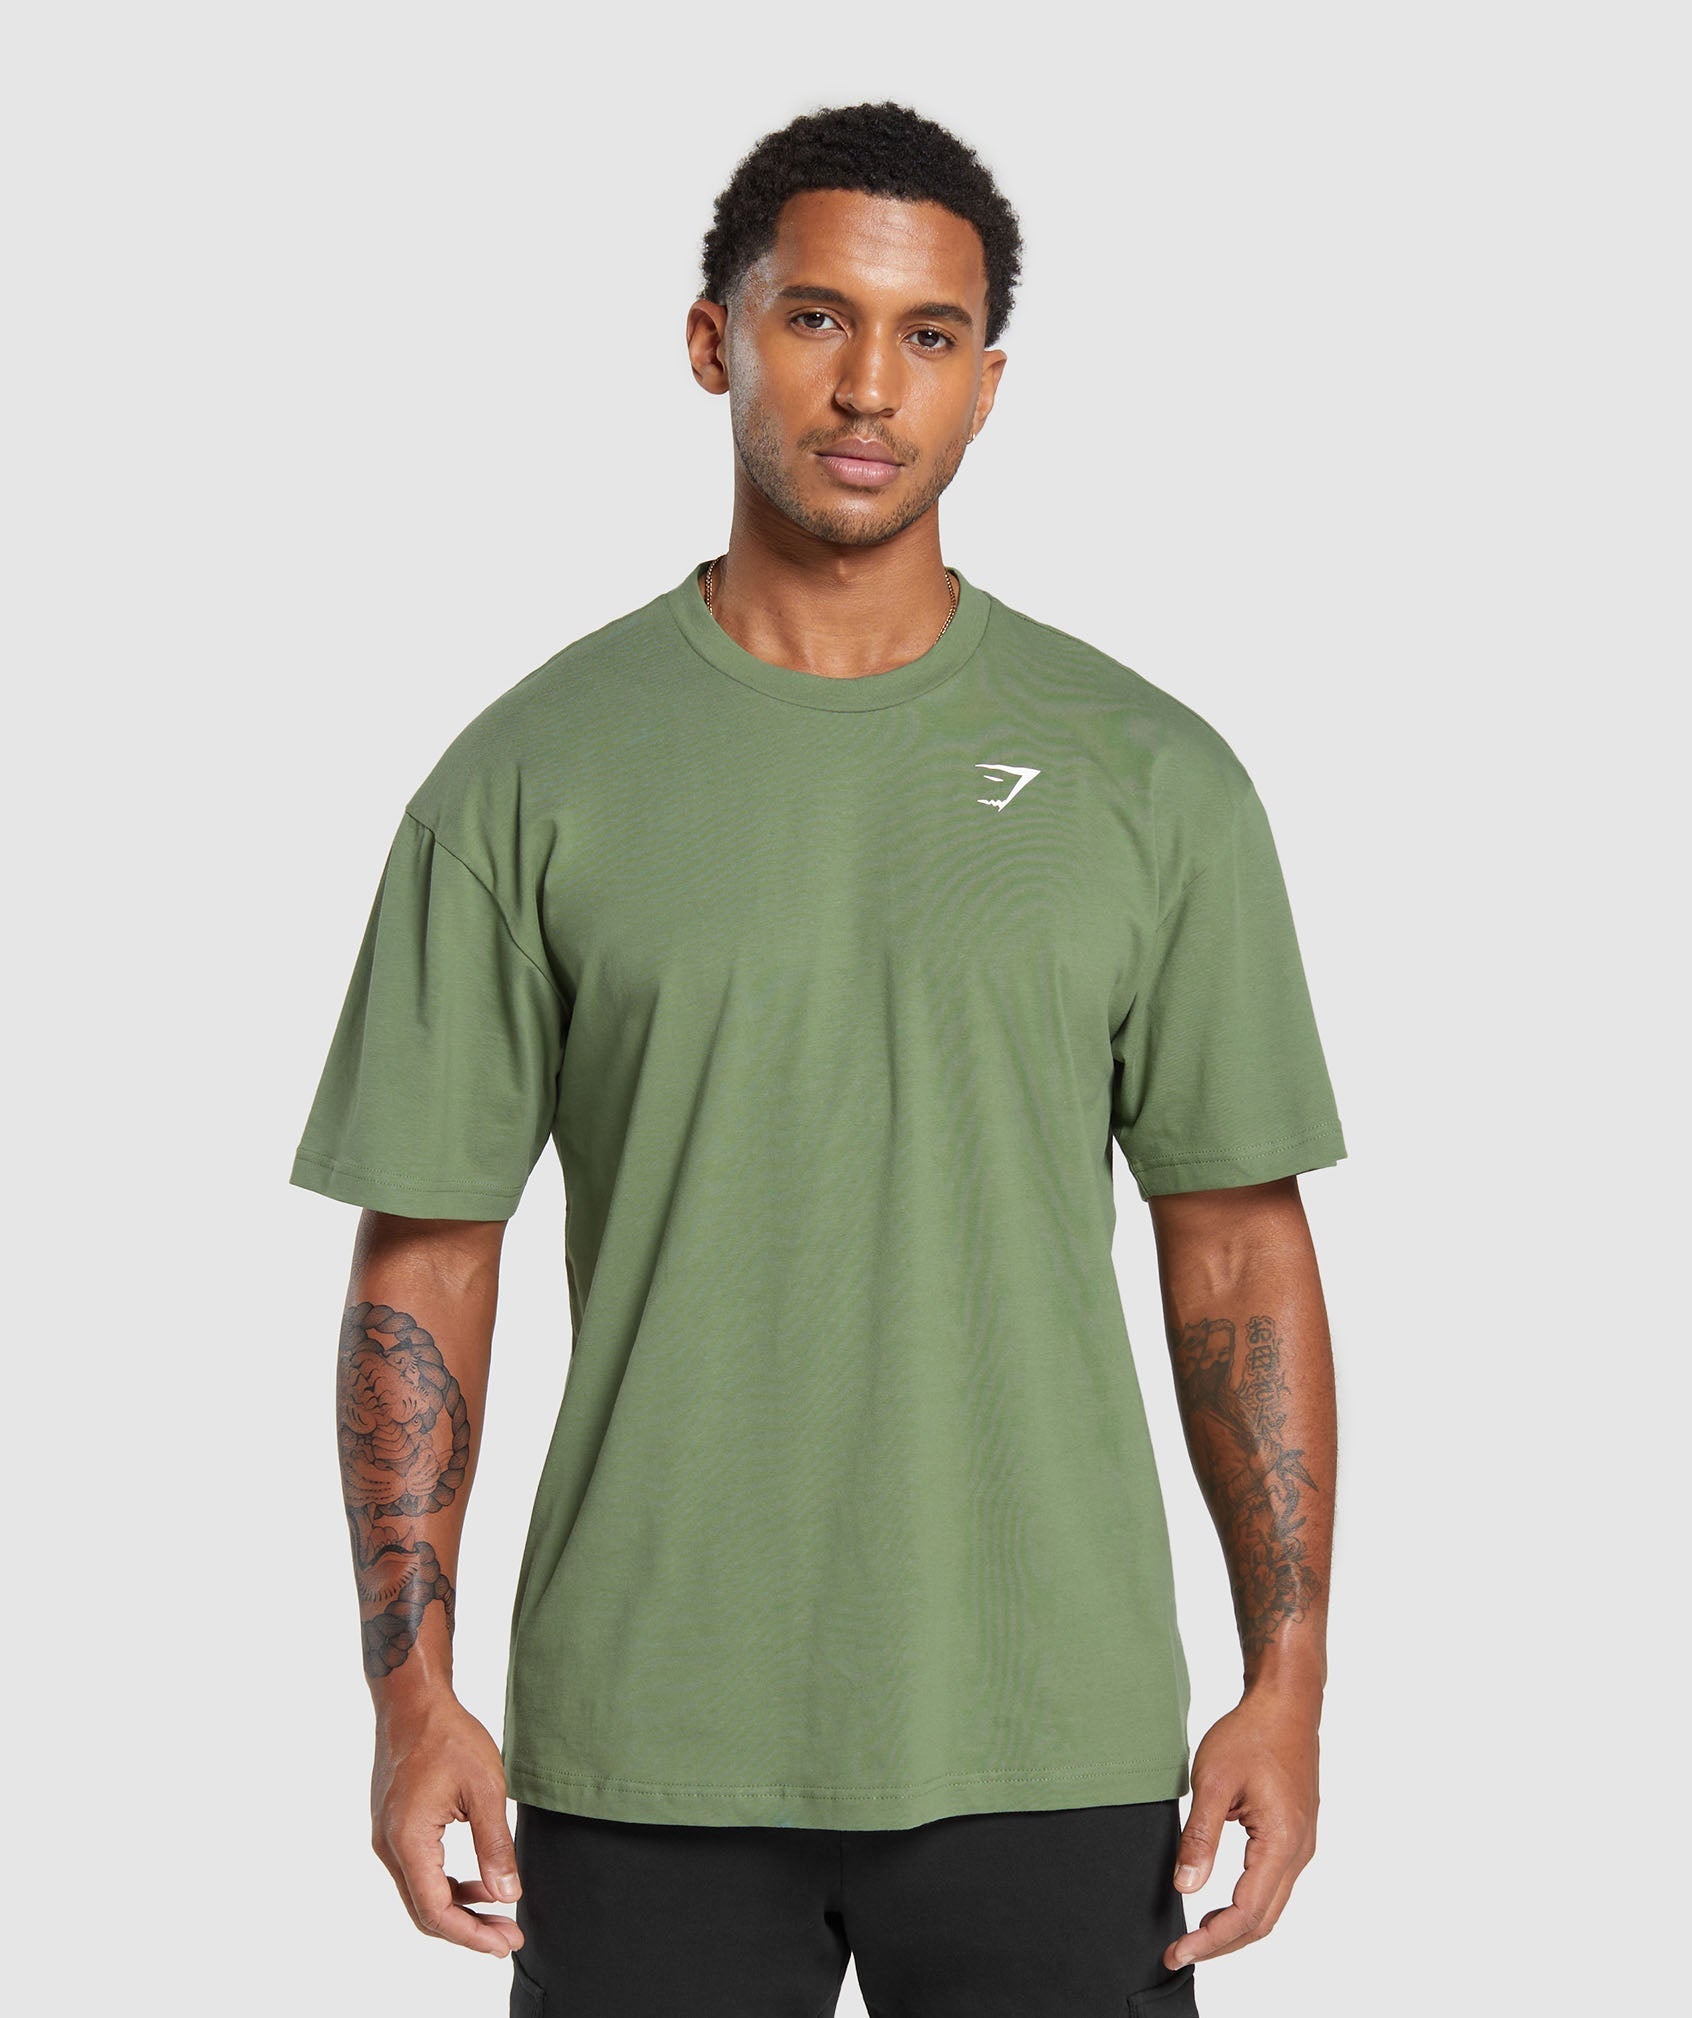 Essential Oversized T-Shirt en Force Green está agotado